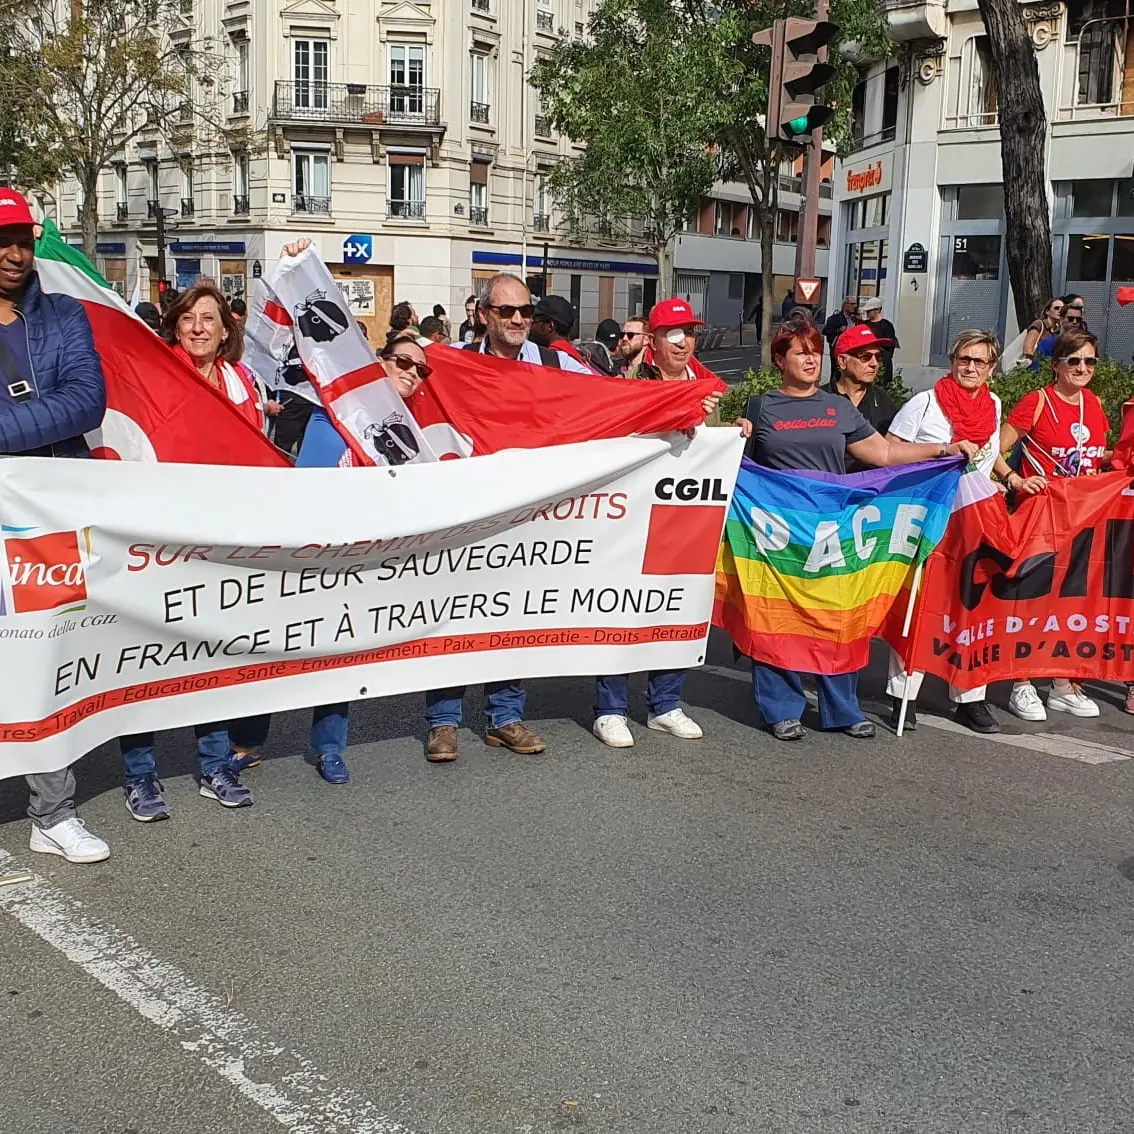 Mobilitazione europea “On the road for a fair deal for workers”, manifestazione a Parigi